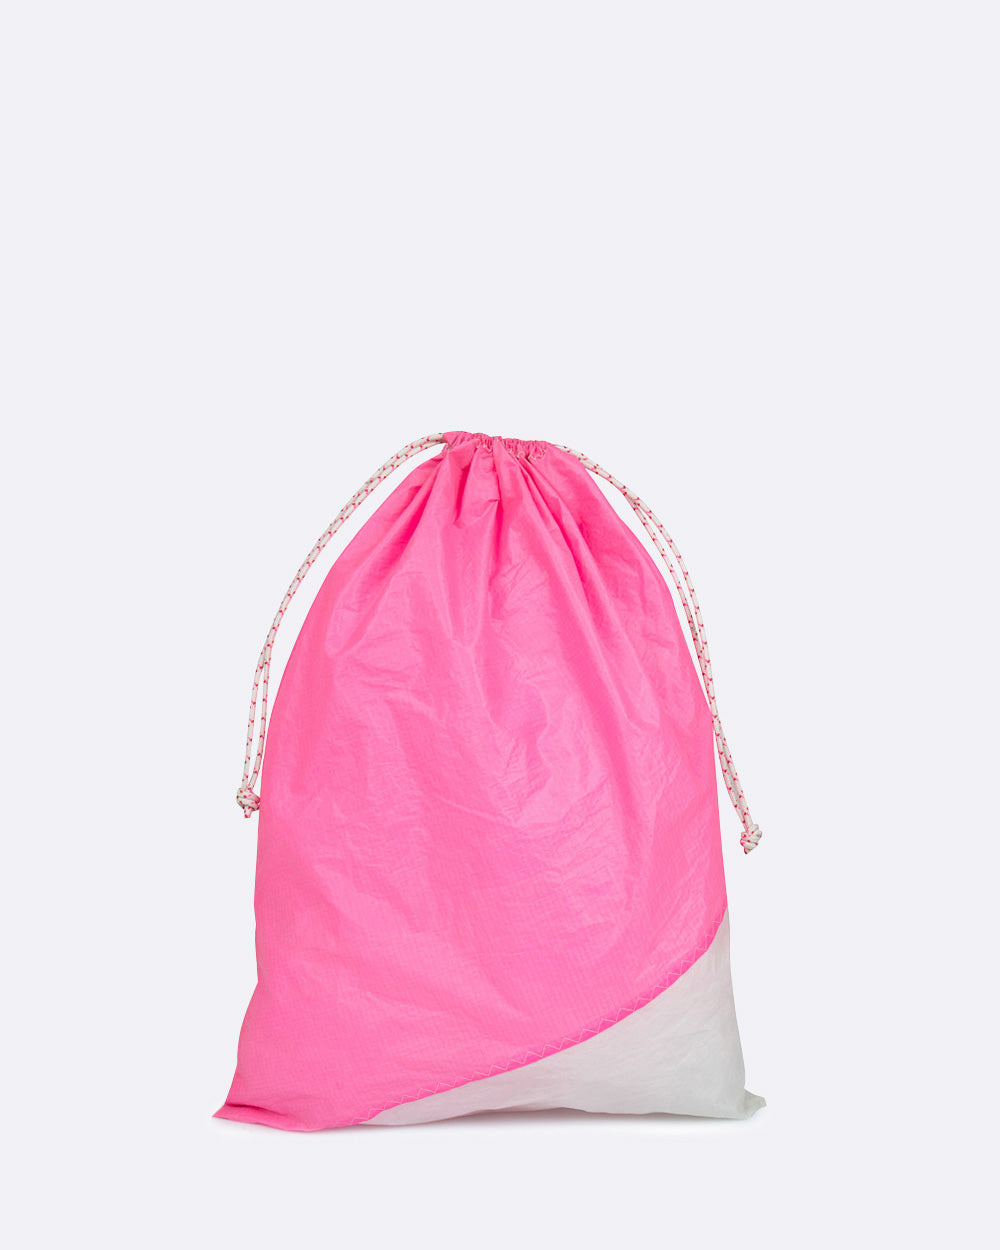 Strandbeutel "Spi Bag" by 727 Sailbags / Segeltuch pink